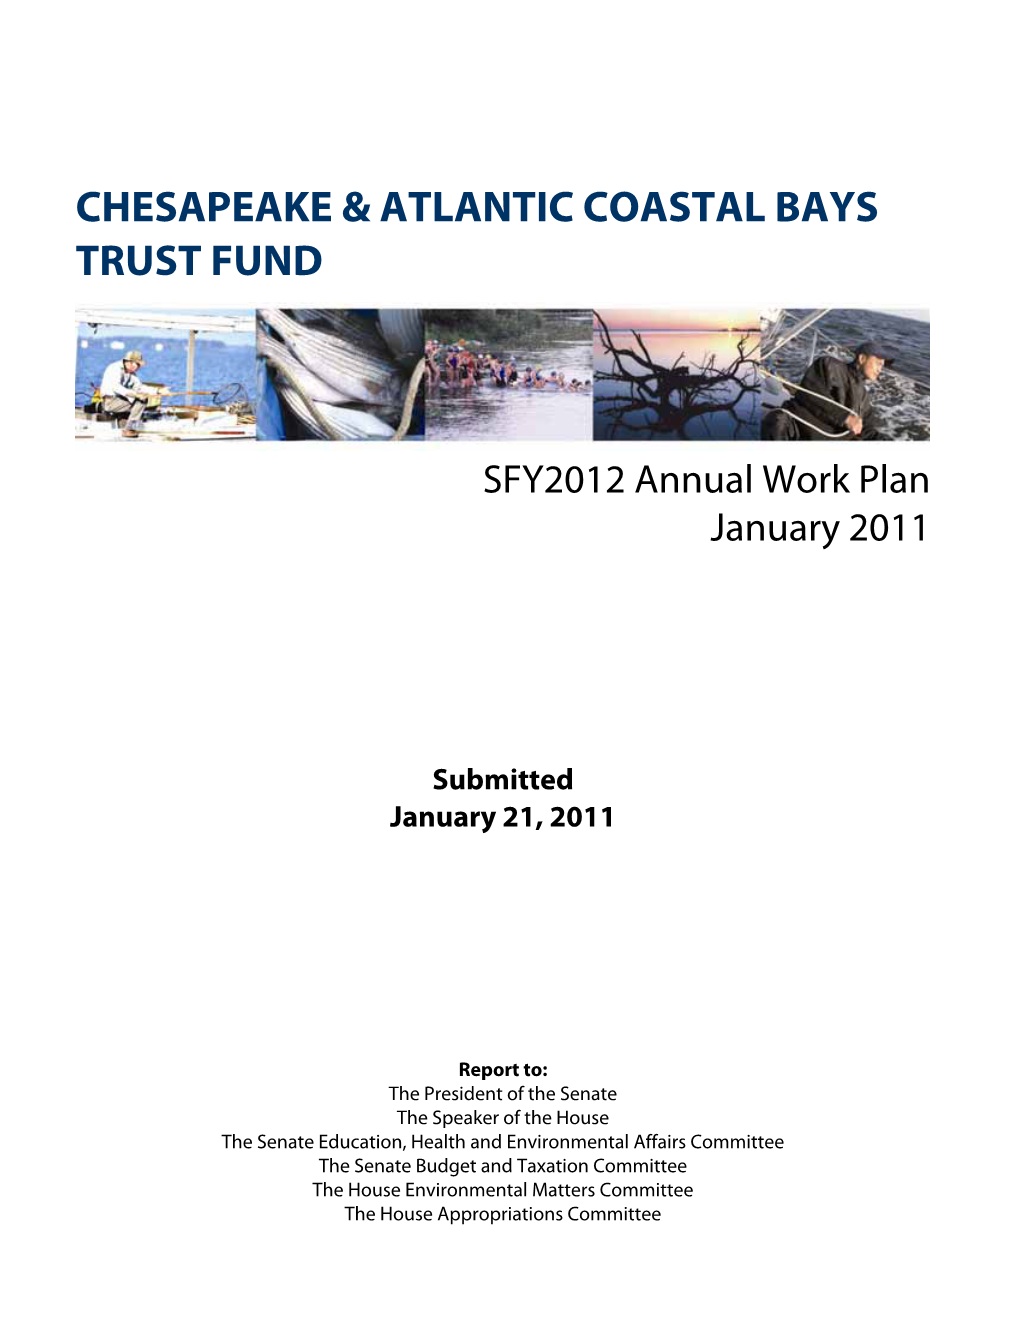 Chesapeake & Atlantic Coastal Bays Trust Fund